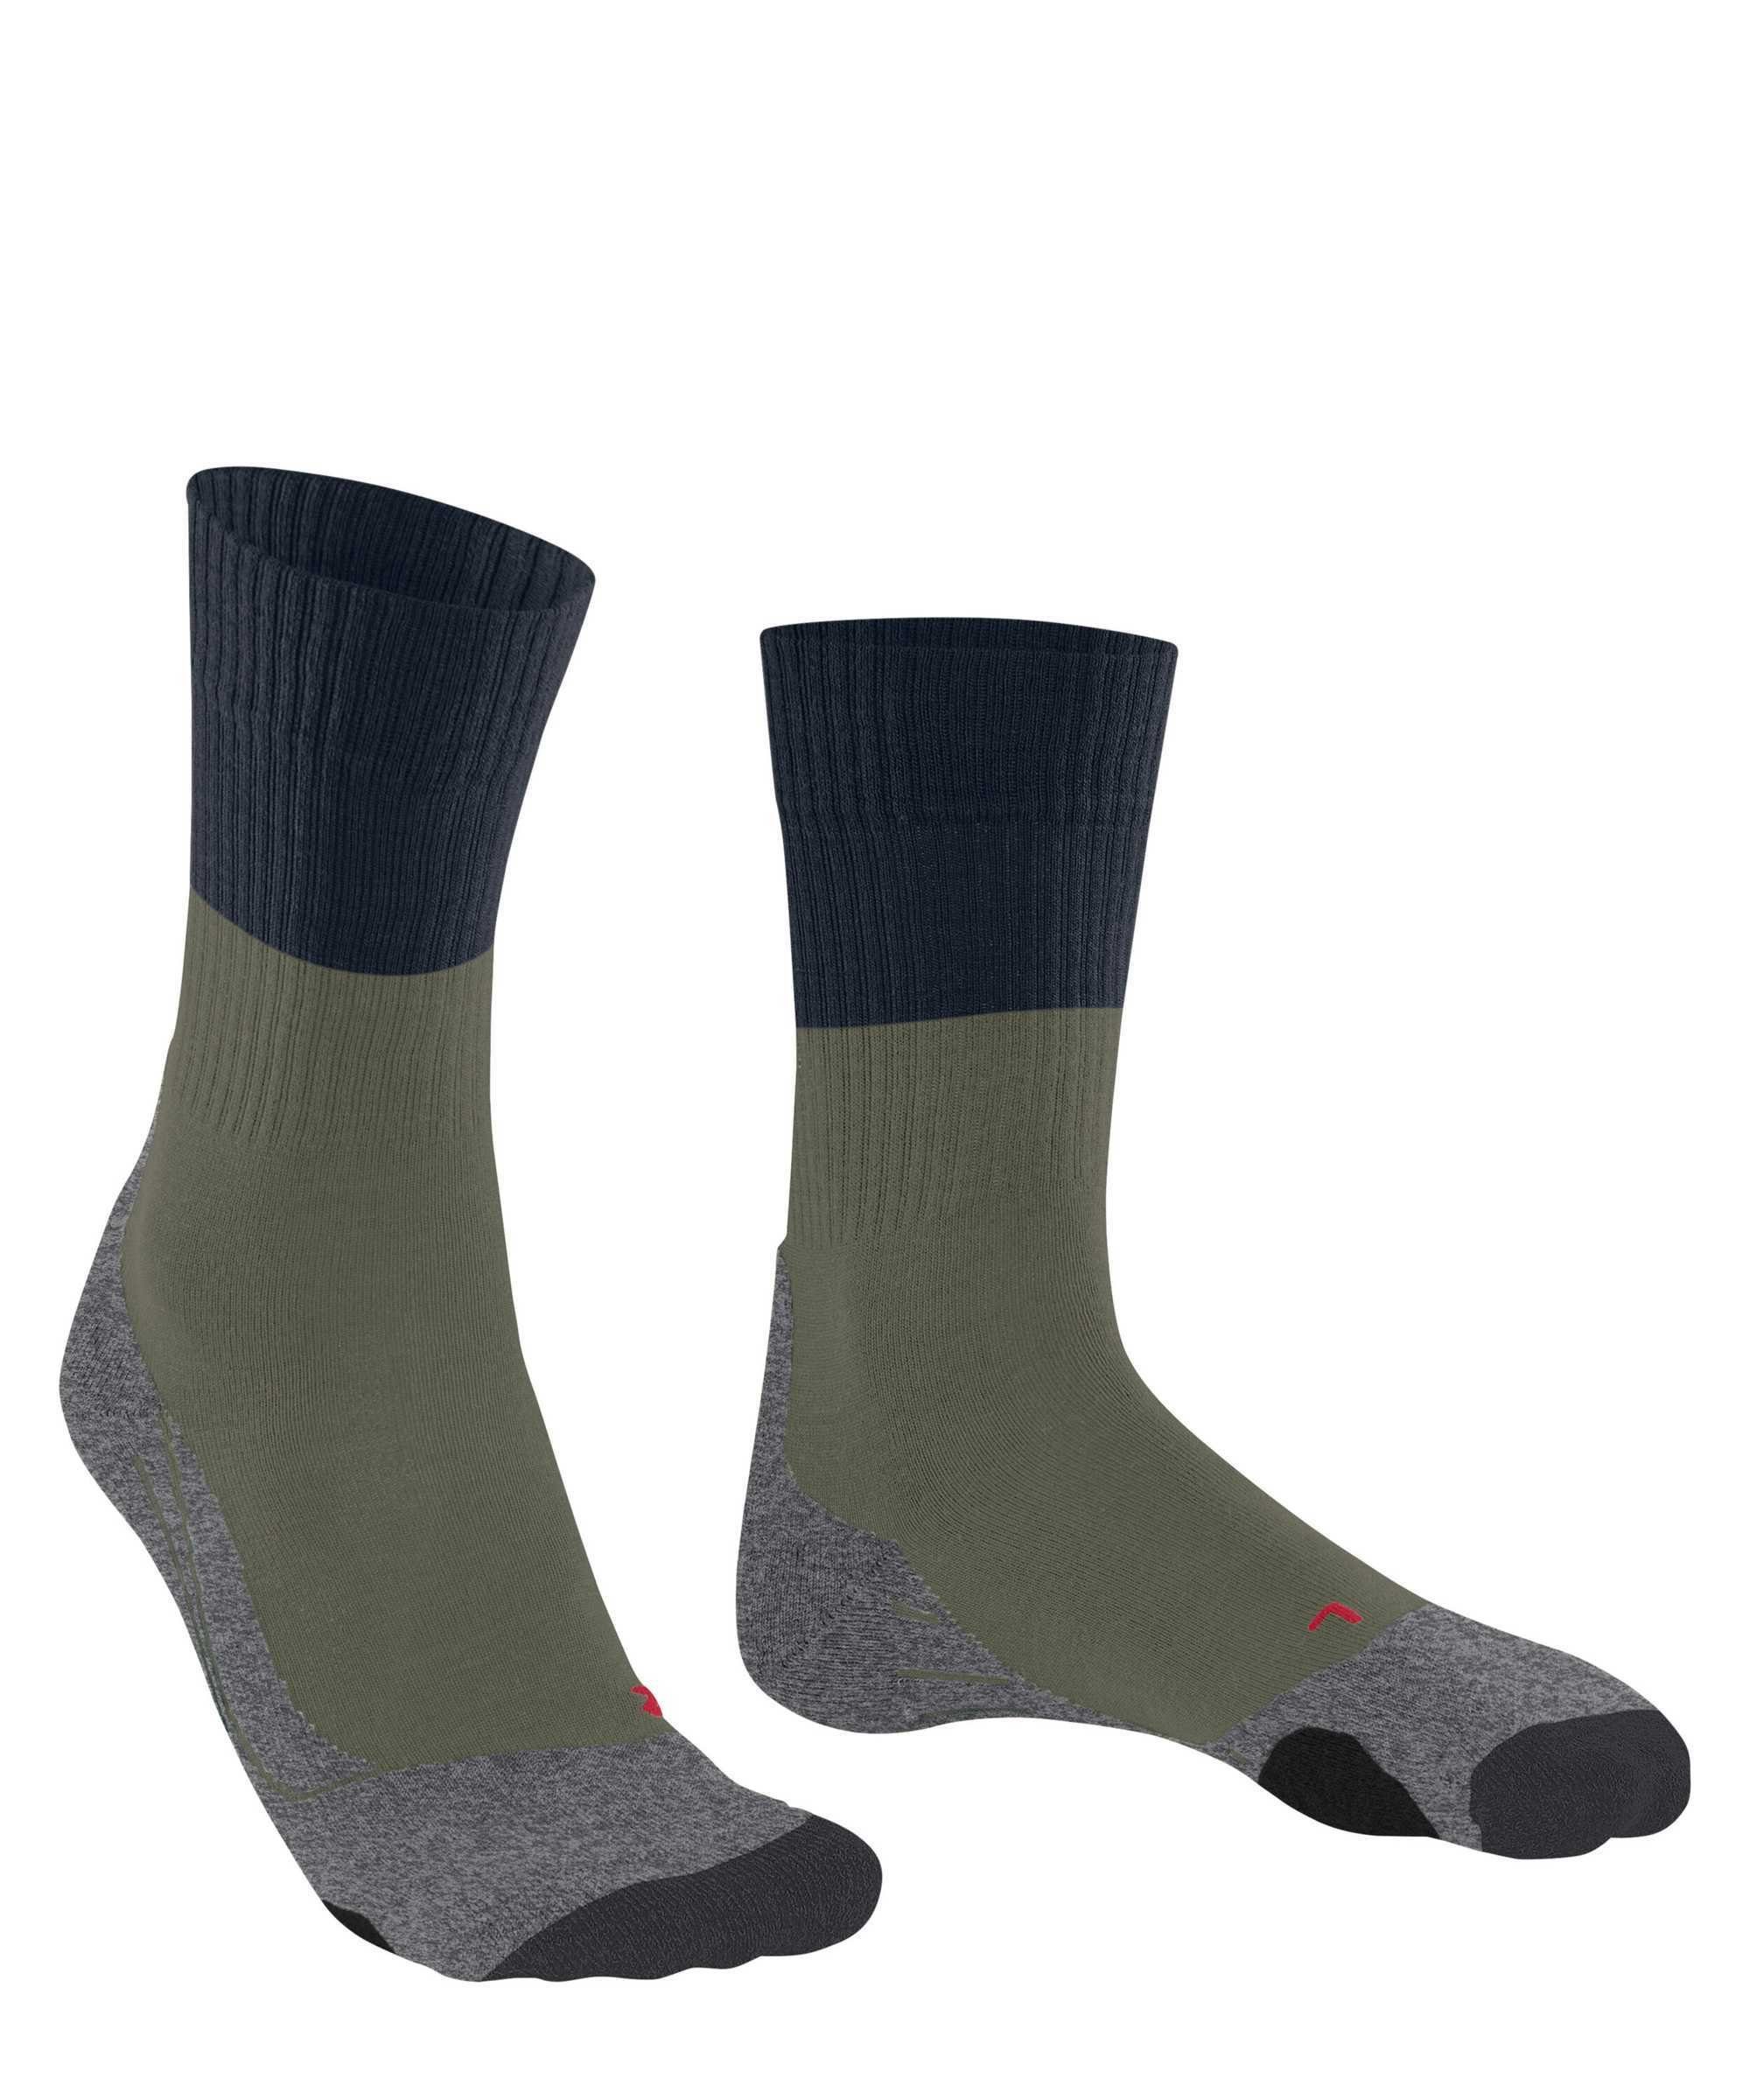 Trekking Grün/Grau (Herb) Sportsocken TK2, Socken FALKE - Polsterung Socken Herren